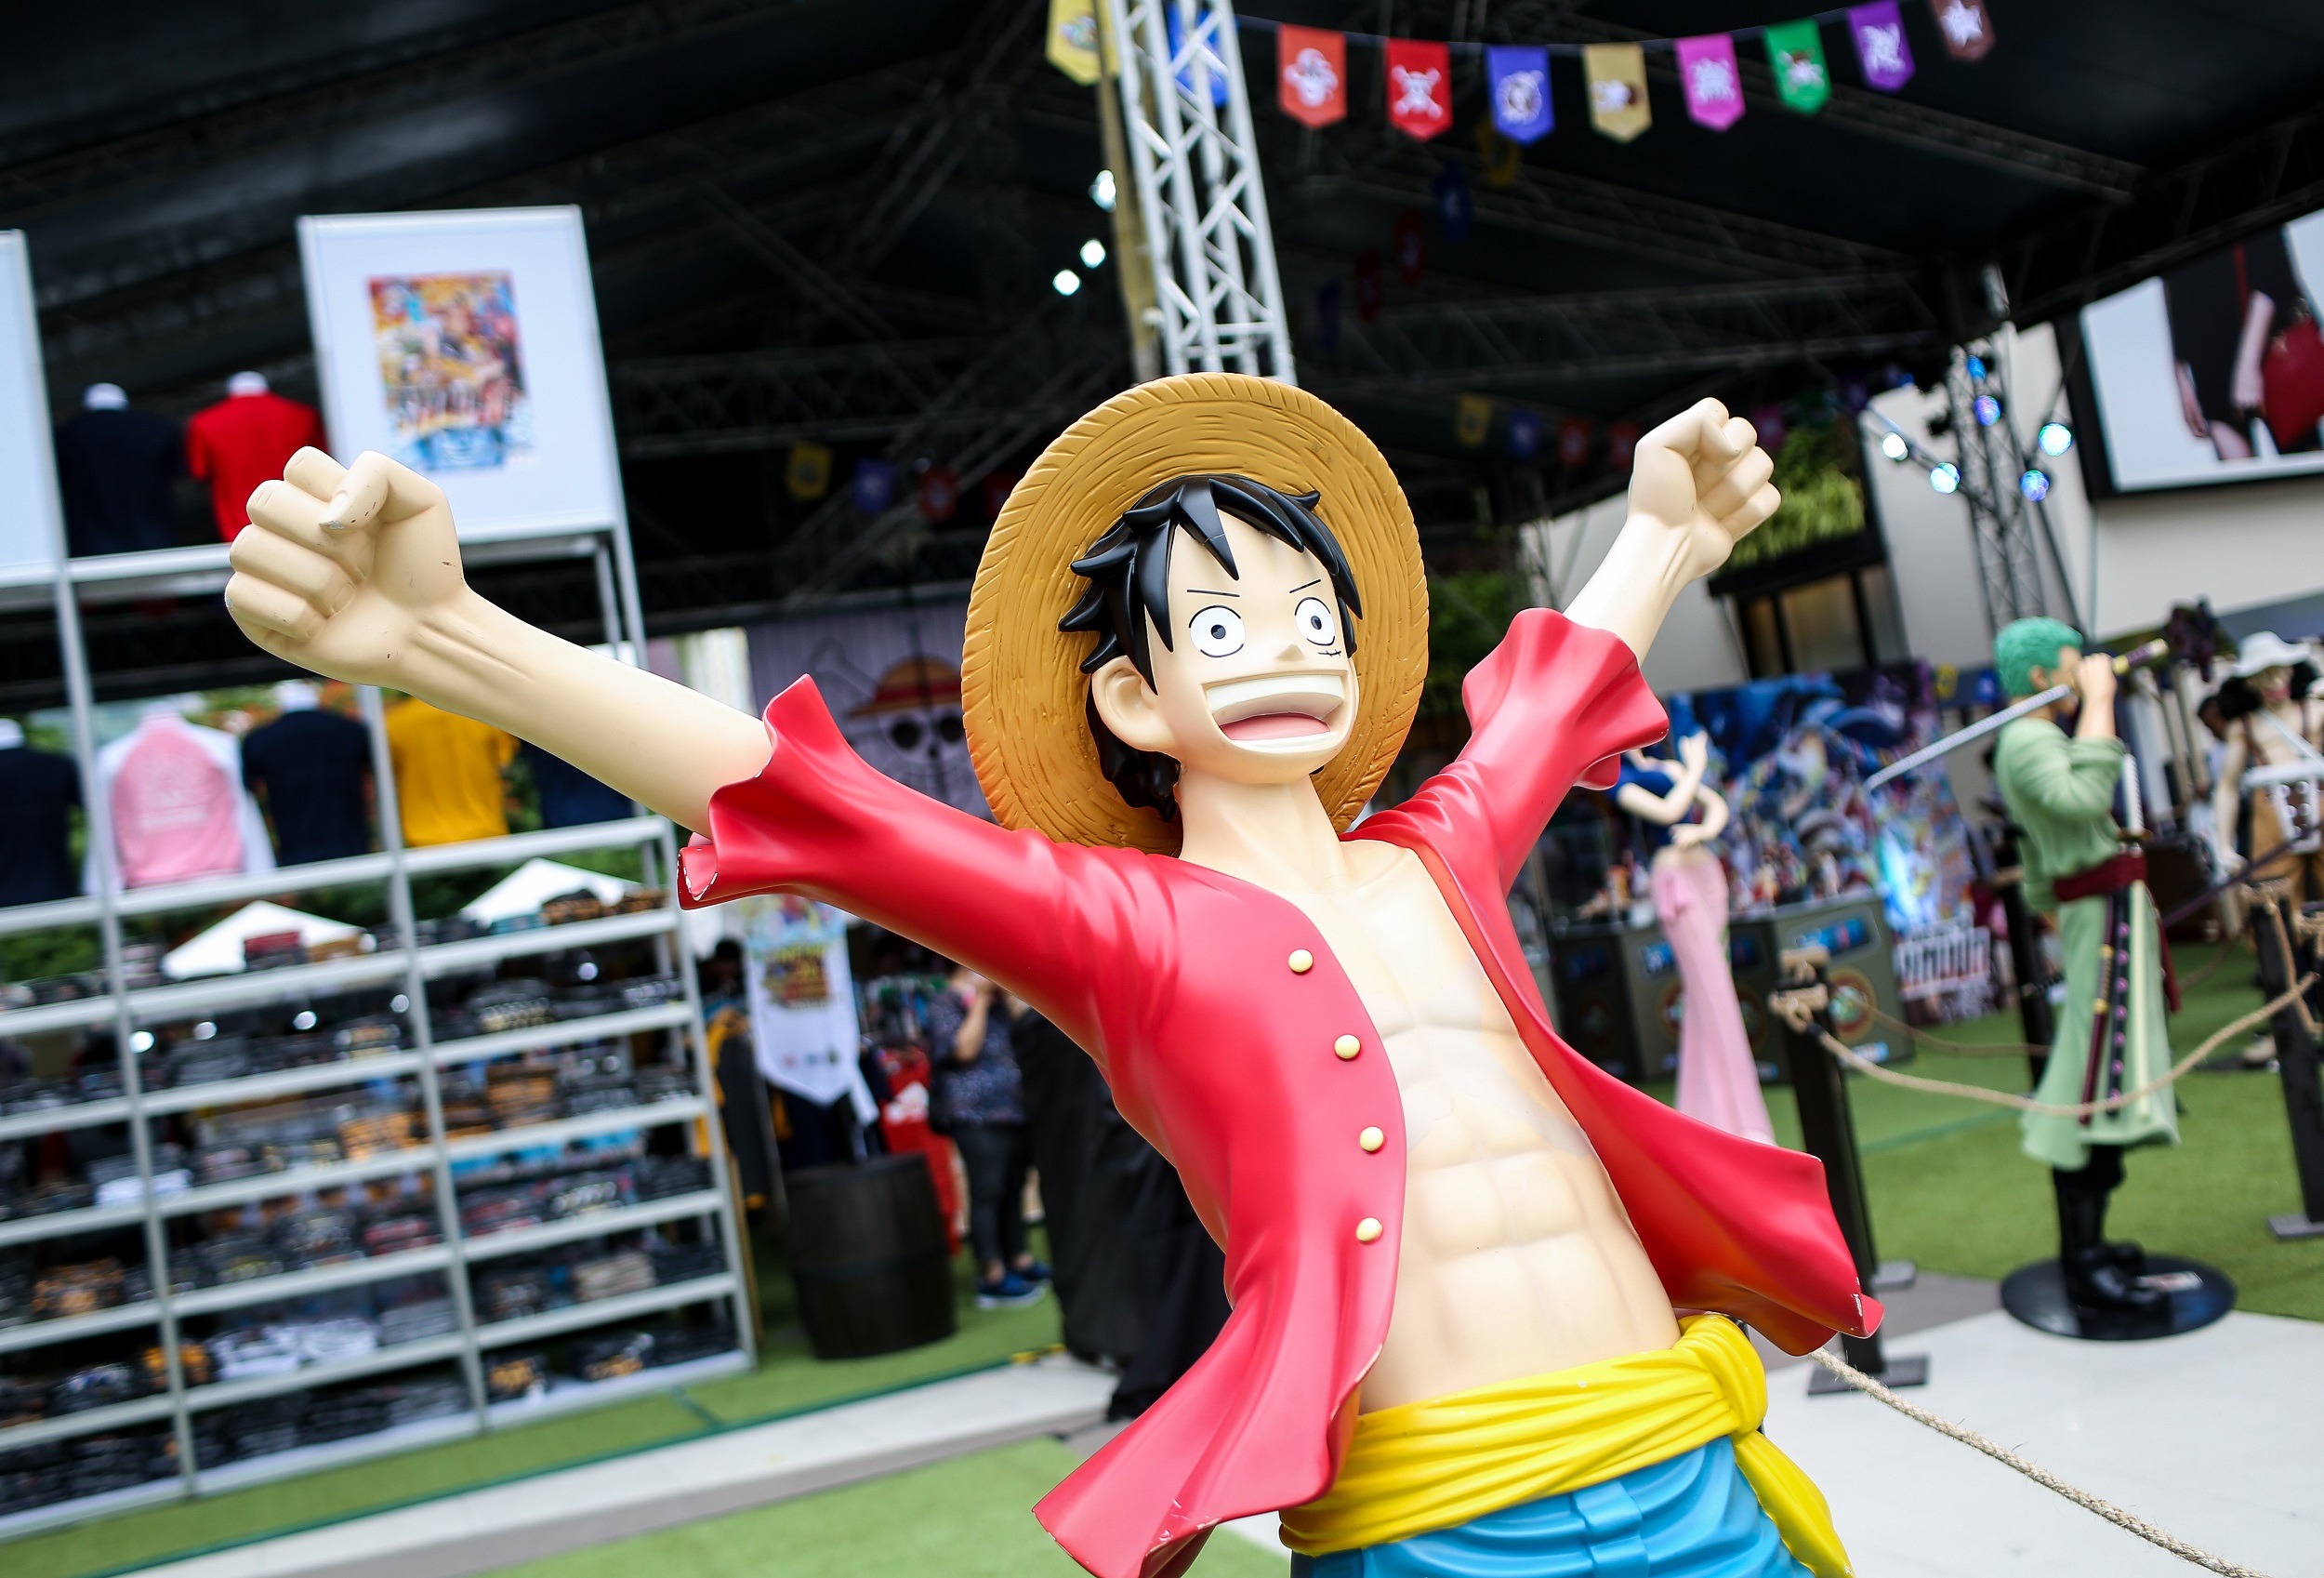 One Piece 20th Anniversary in Thailand